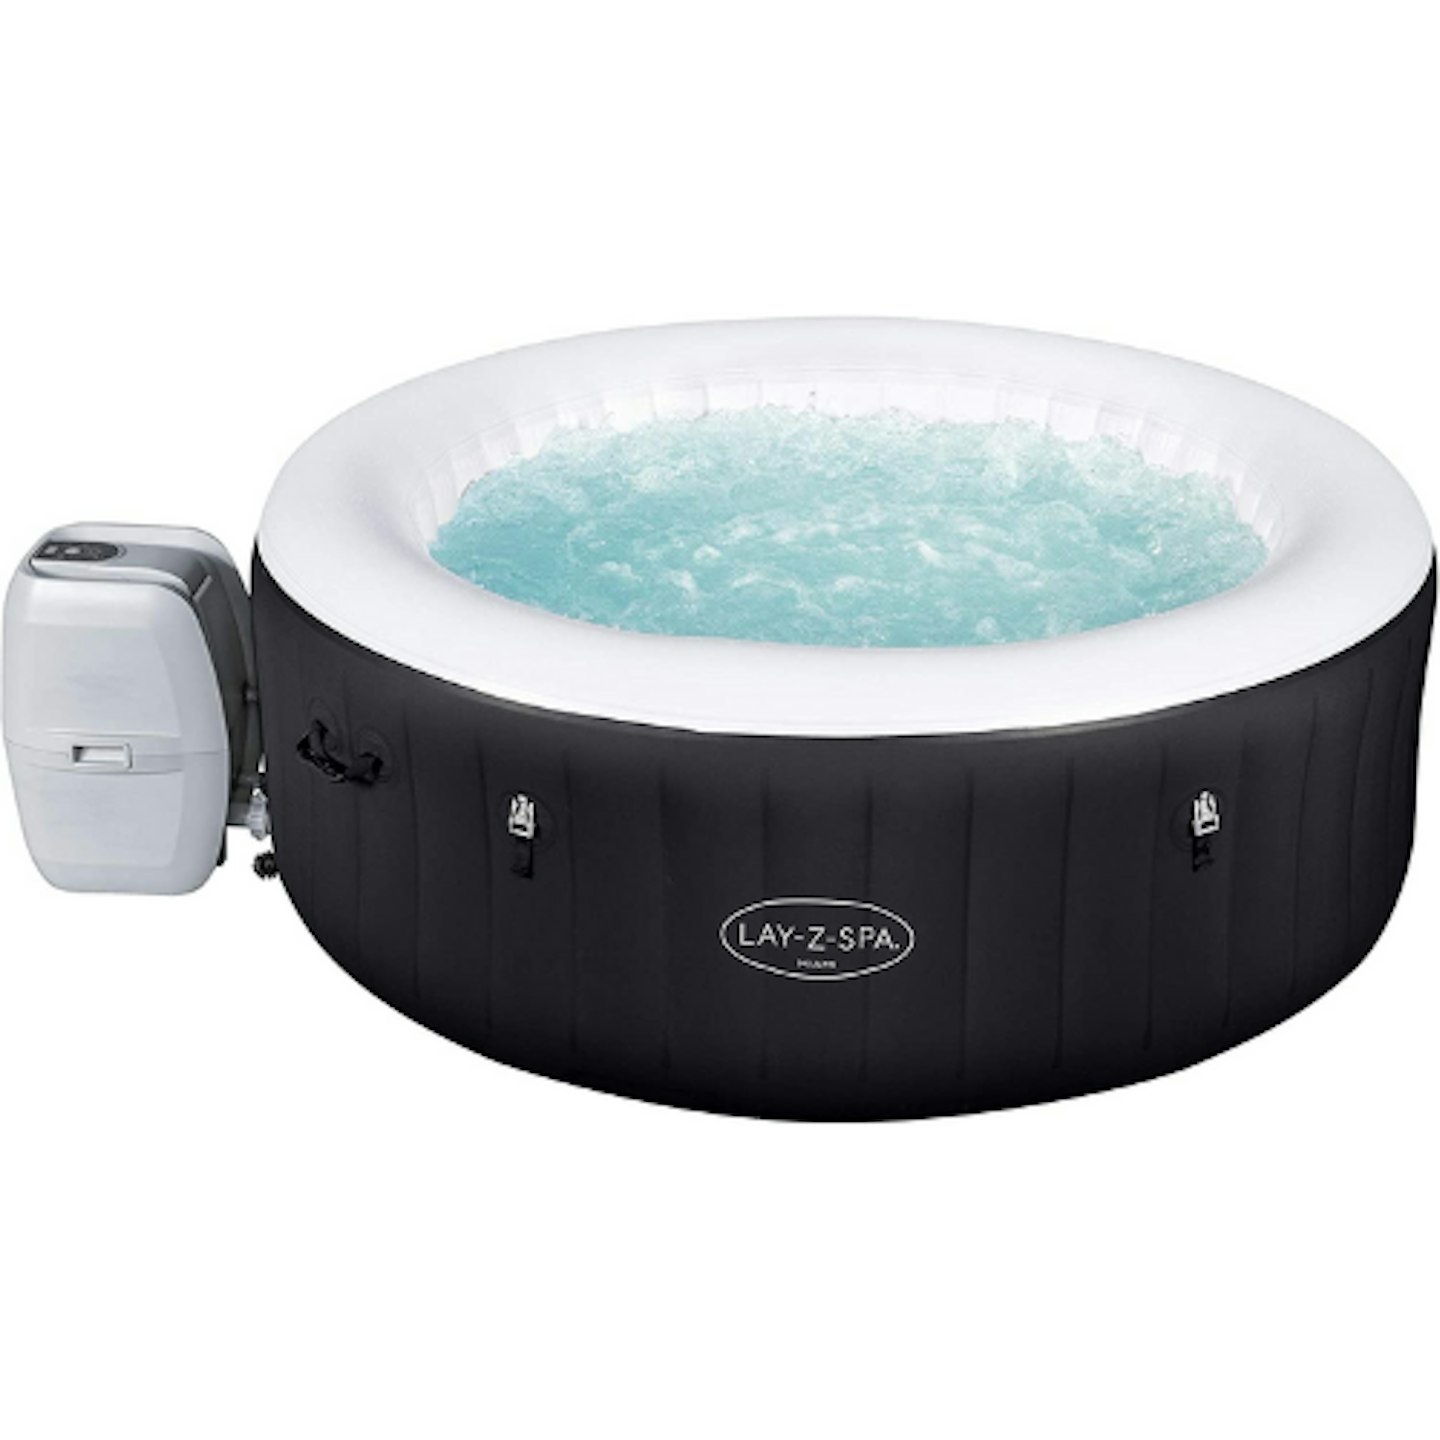 Lay-Z-Spa 60001 Miami Hot Tub